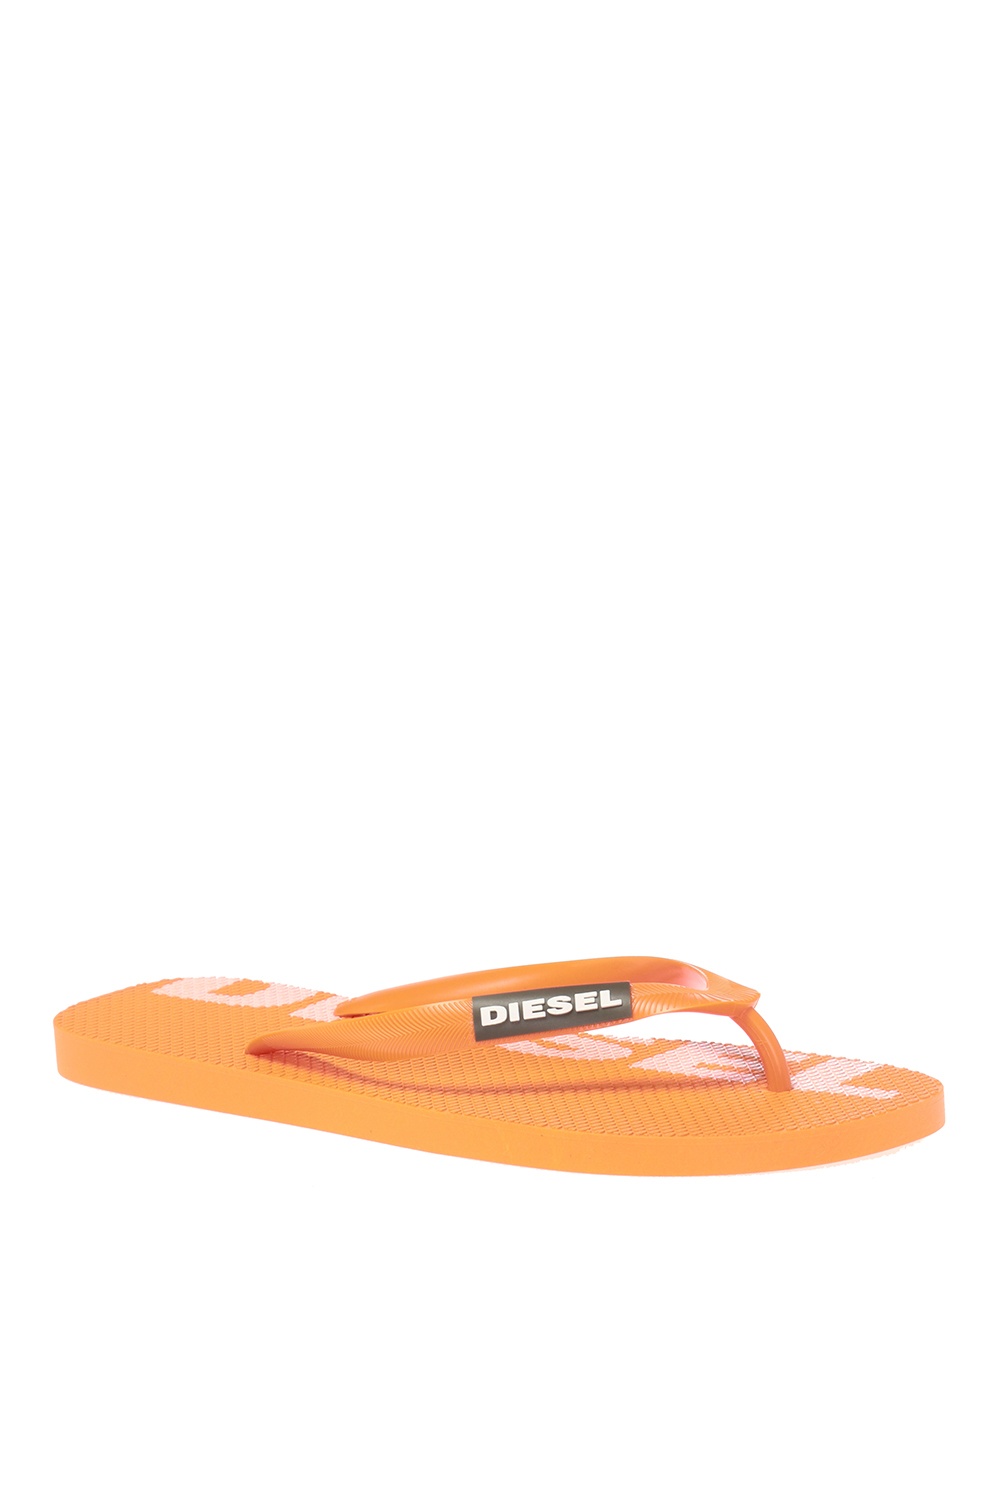 Diesel ‘Sa-Briian’ flip-flops with logo